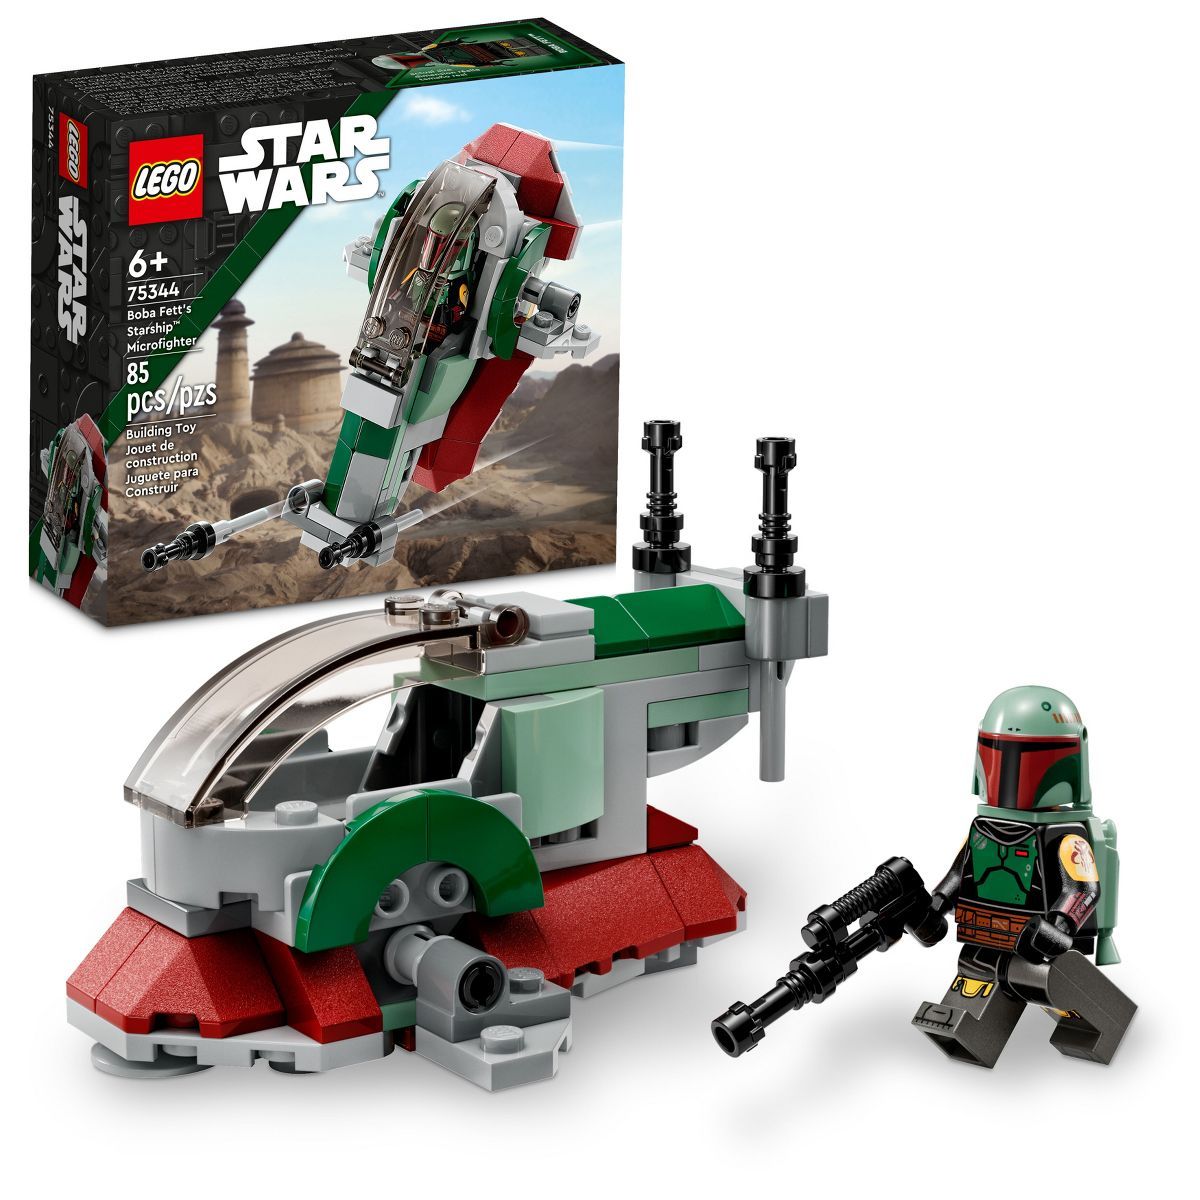 LEGO Star Wars Boba Fett's Starship Microfighter Set 75344 | Target